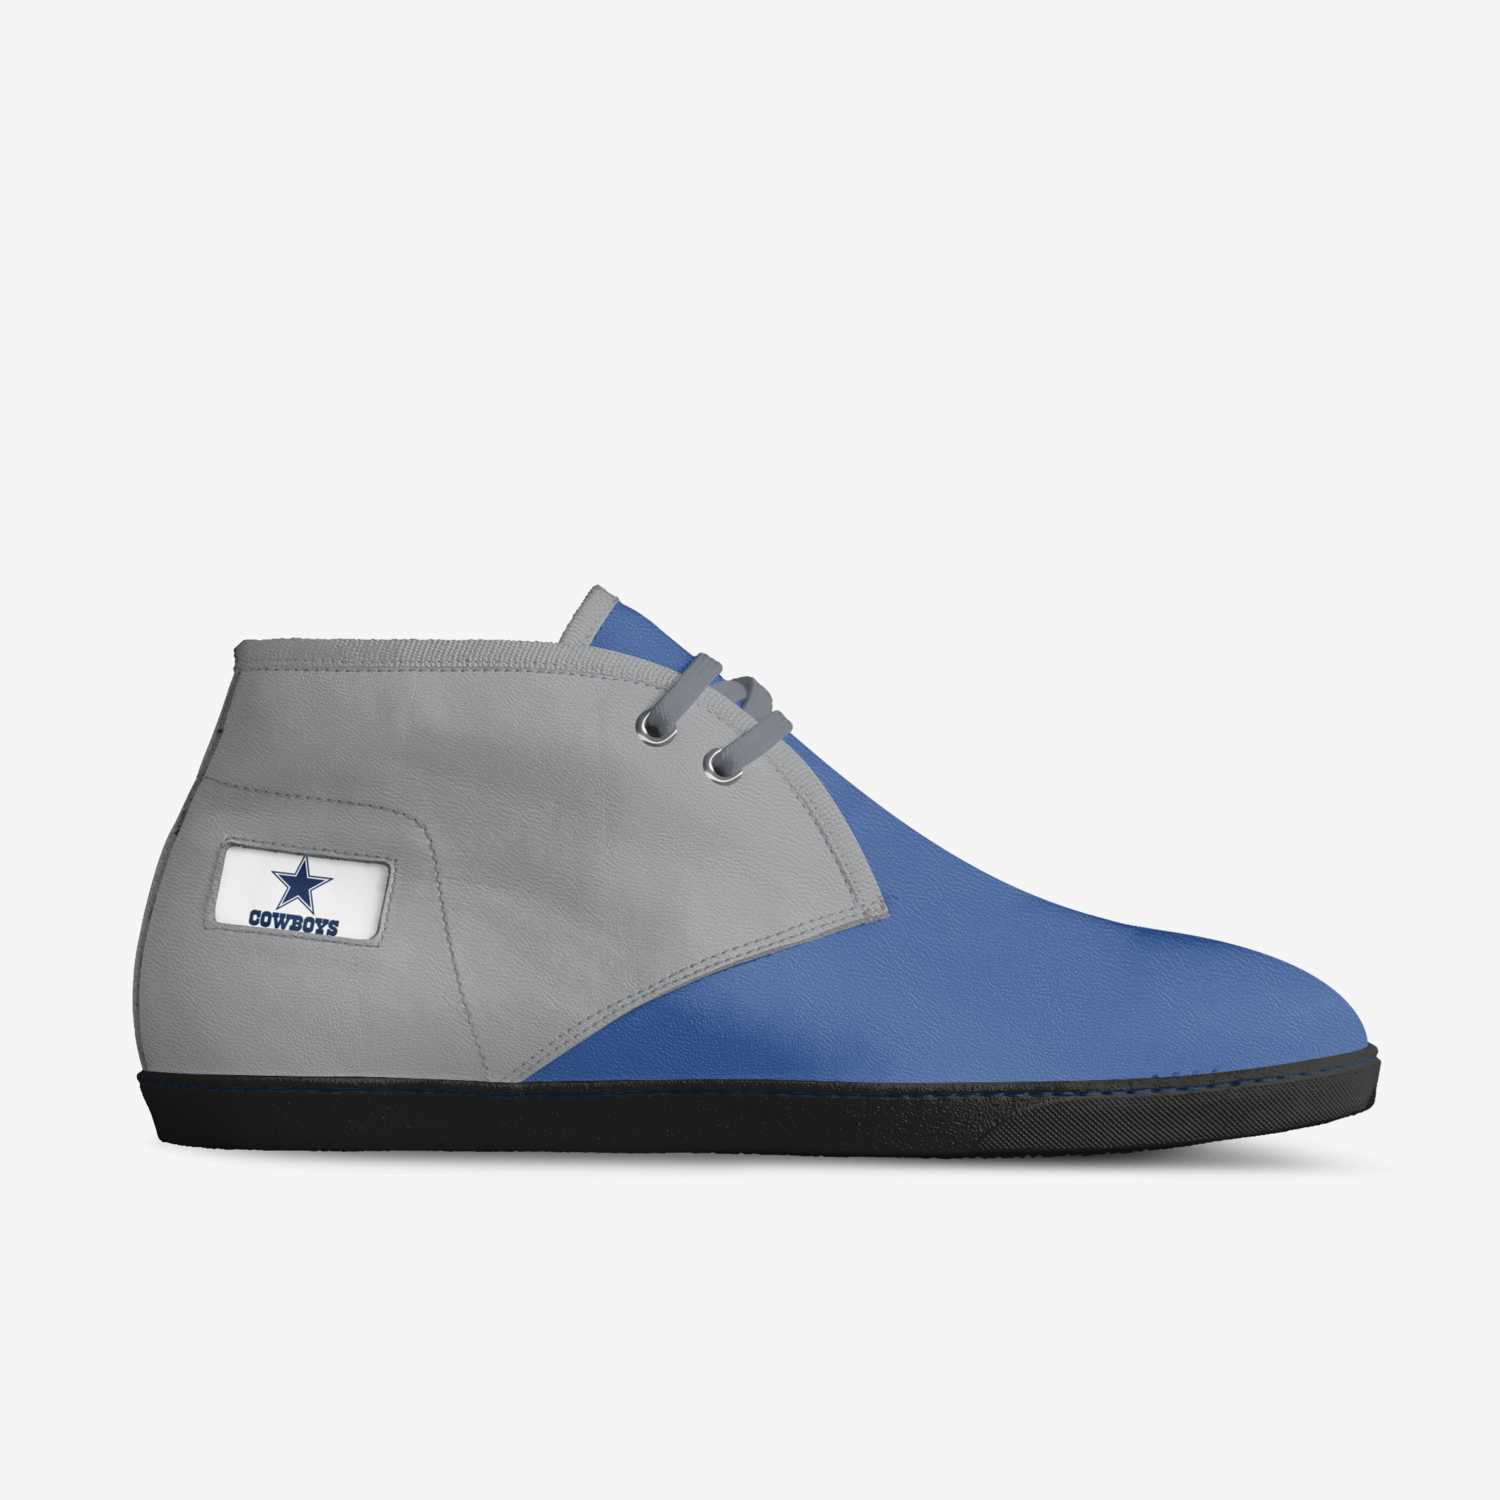 Dak Preskot custom made in Italy shoes by Chris | Side view